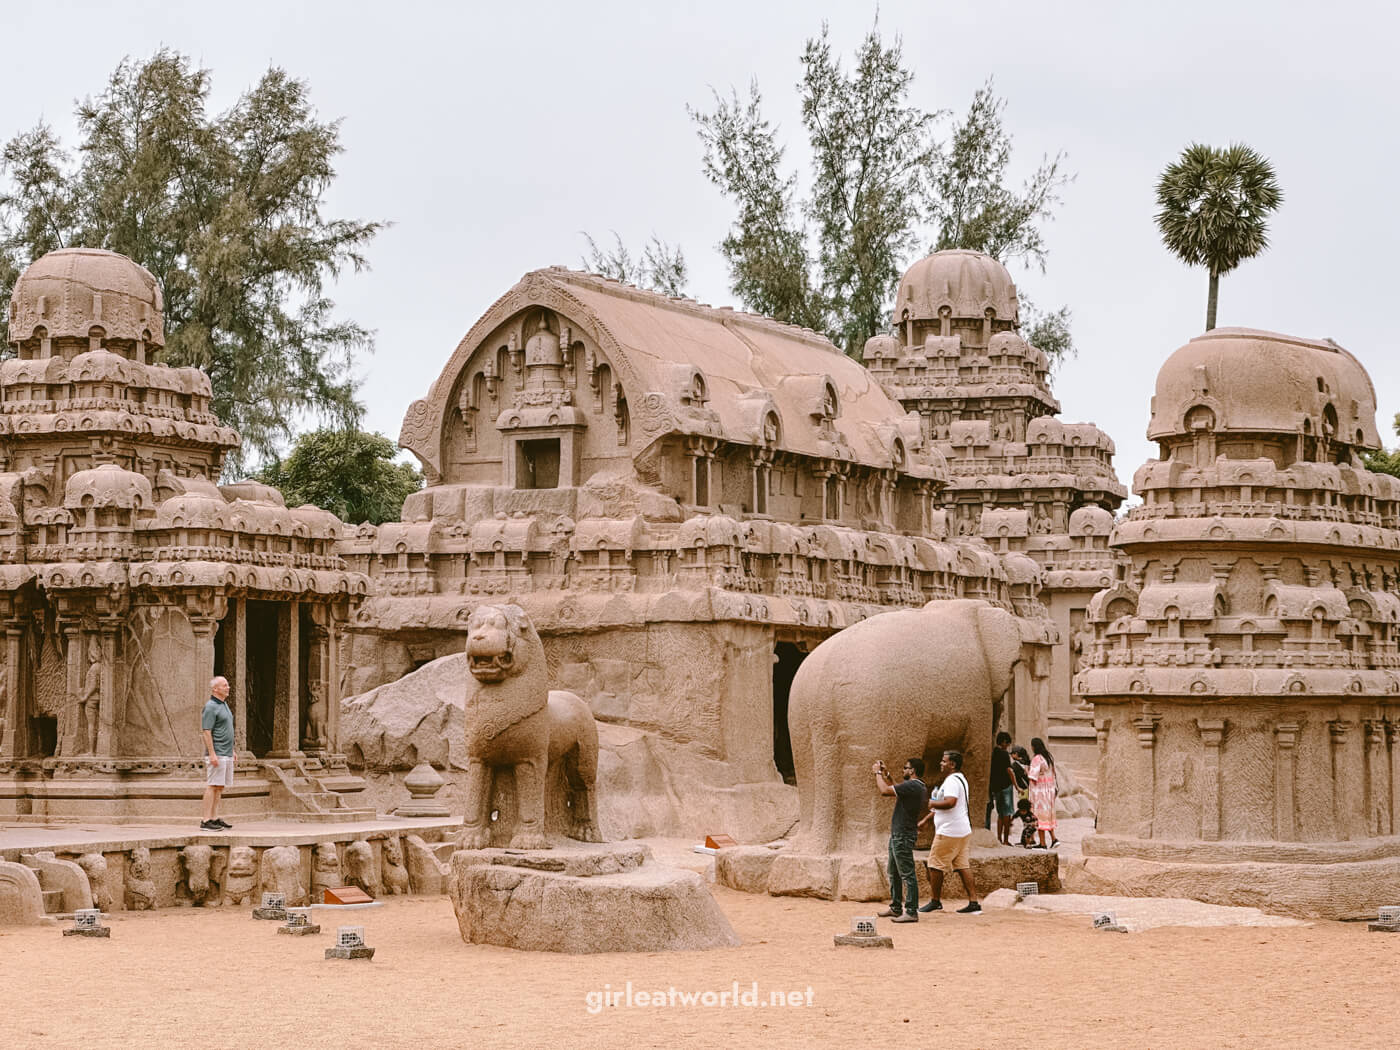 Pancha Rathas Mahabalipuram